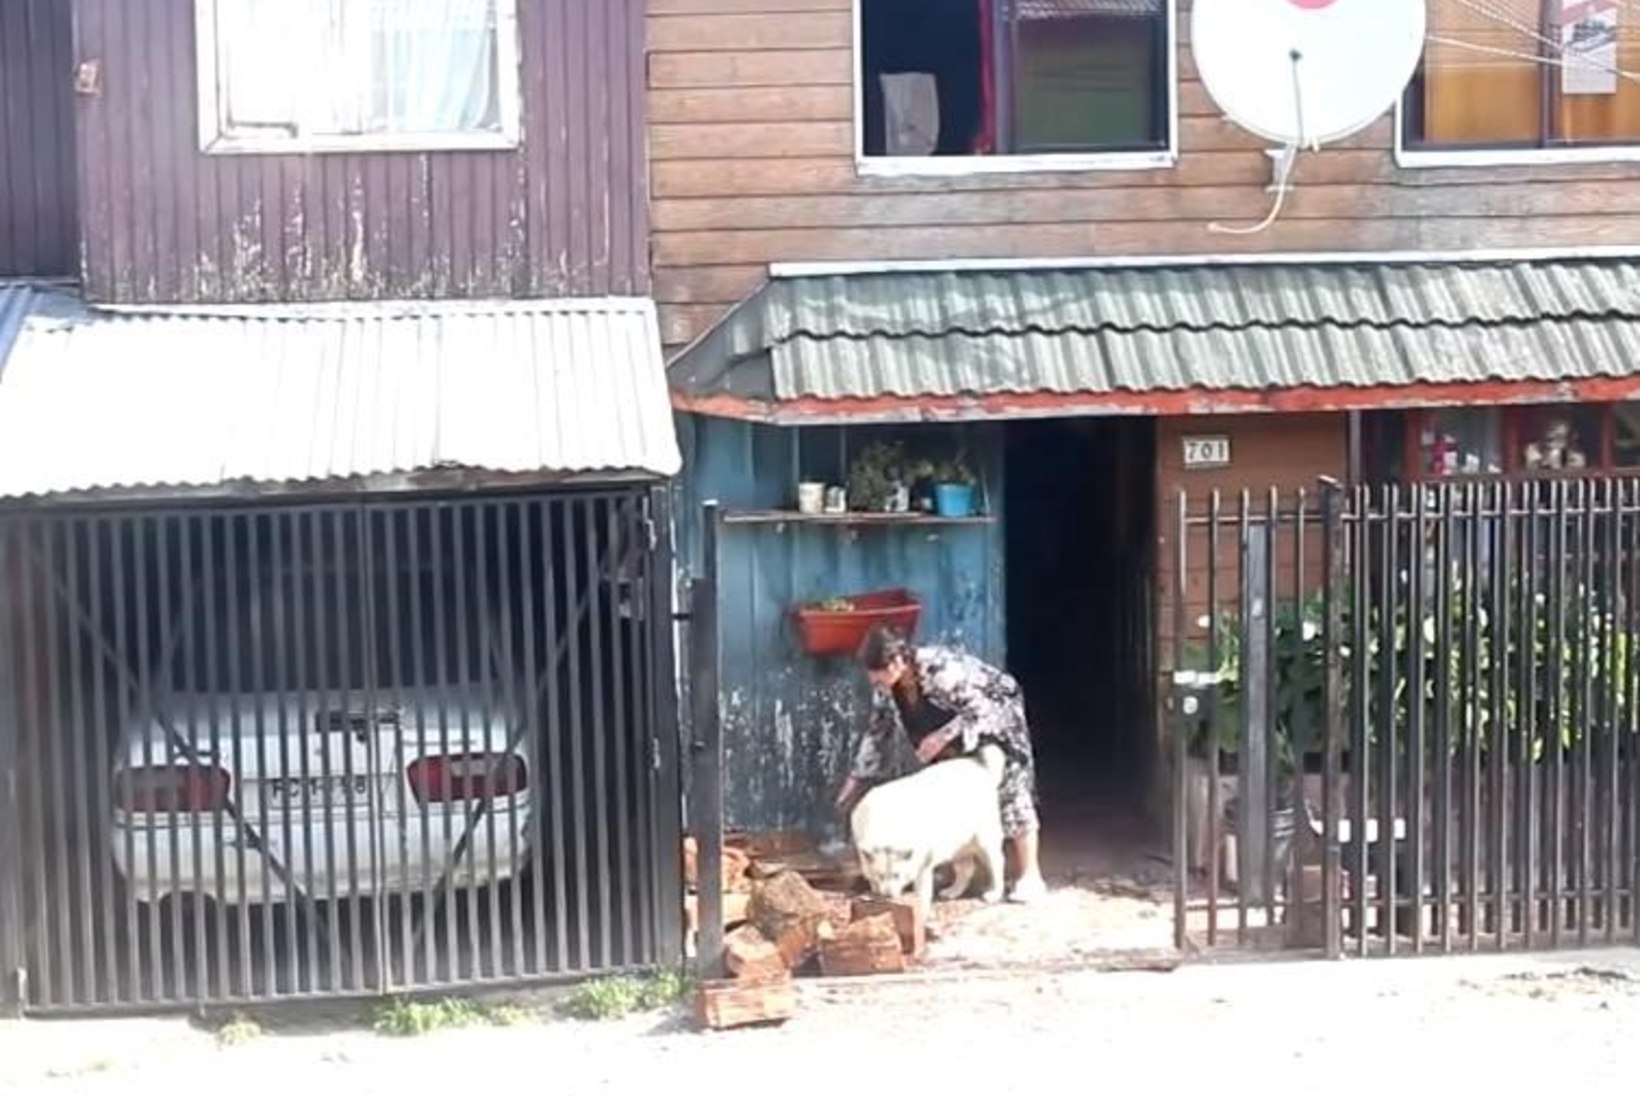 VIDEO: Koer aitab eakal paaril küttepuud majja vedada